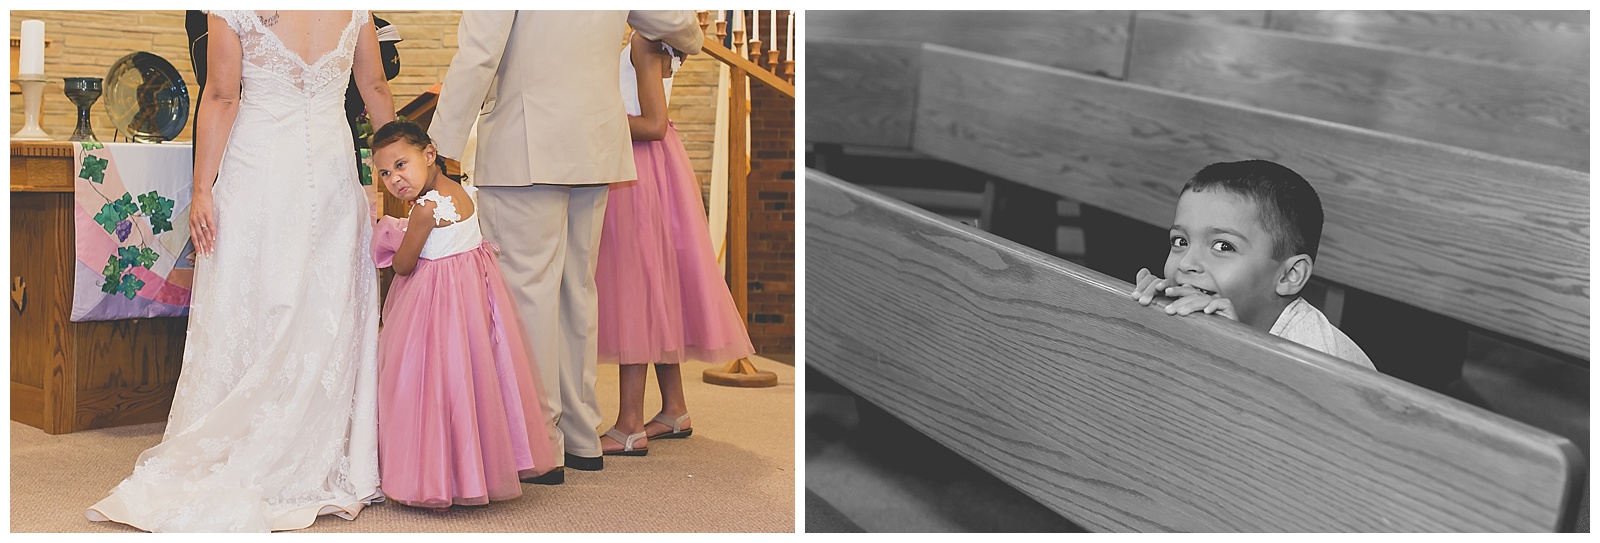 Wedding photography at Trinity Presbyterian Church in Topeka, Kansas.